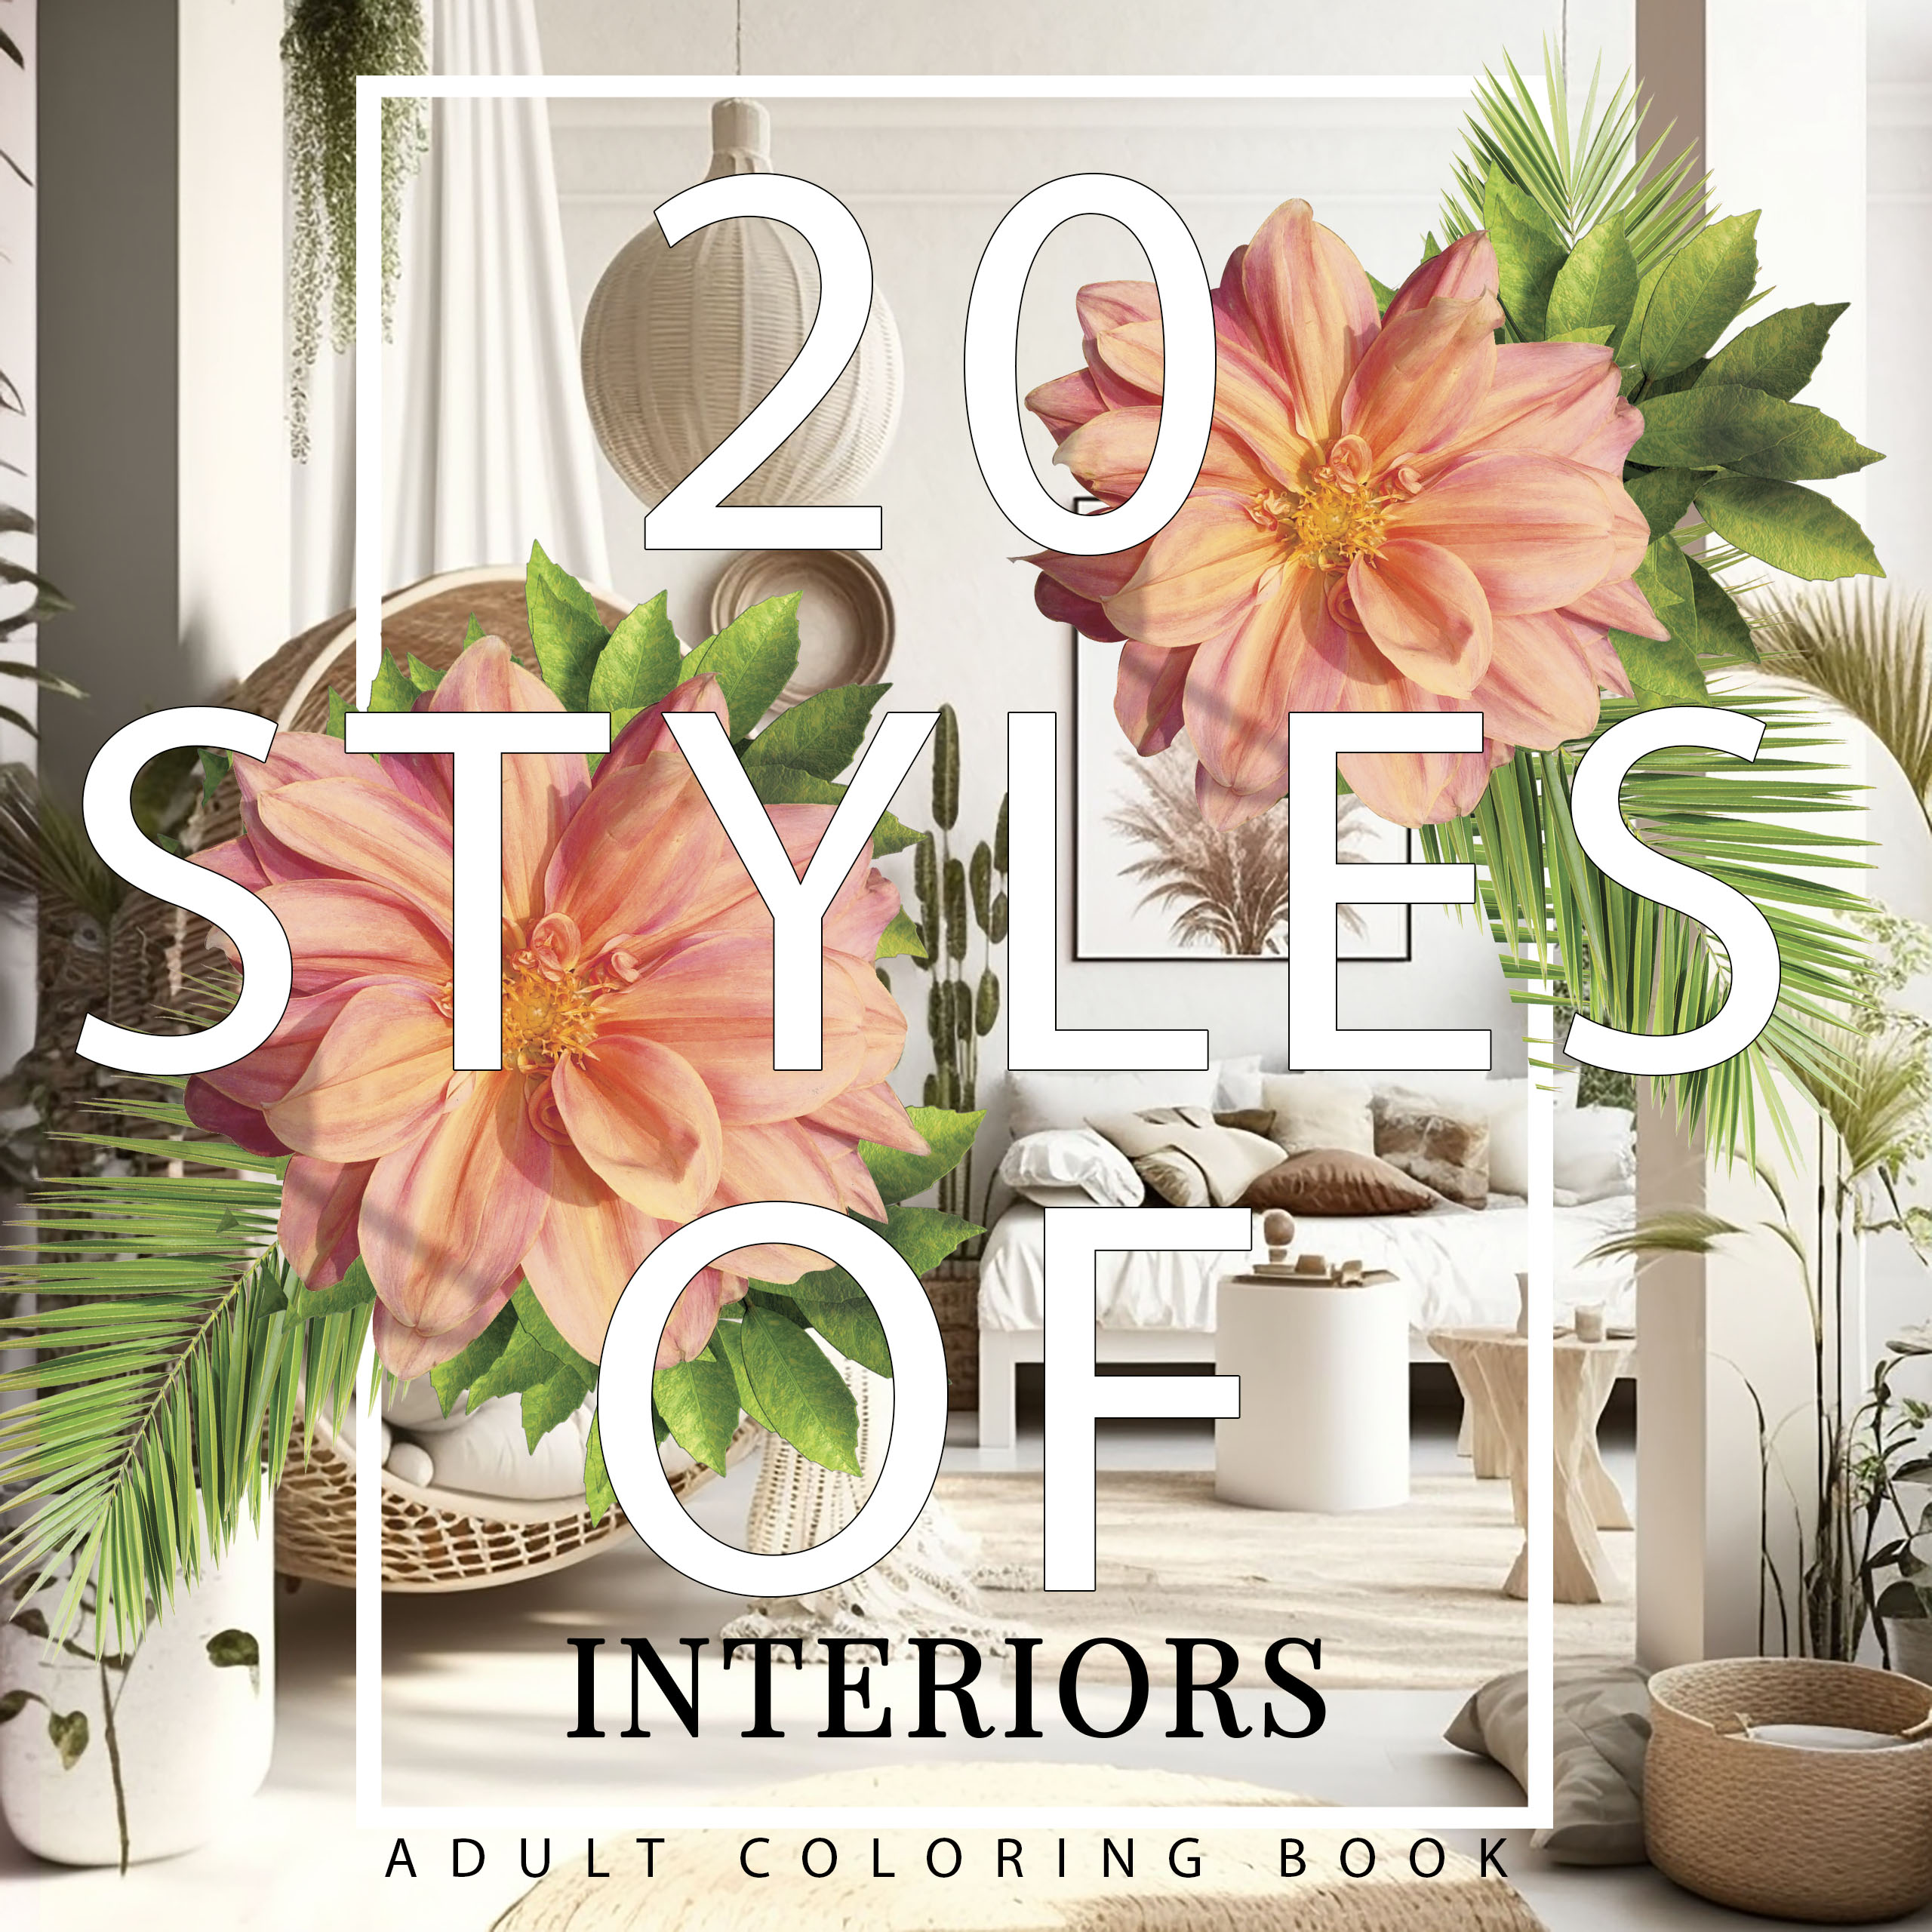   Interiors adult coloring book: 20 different interior design styles